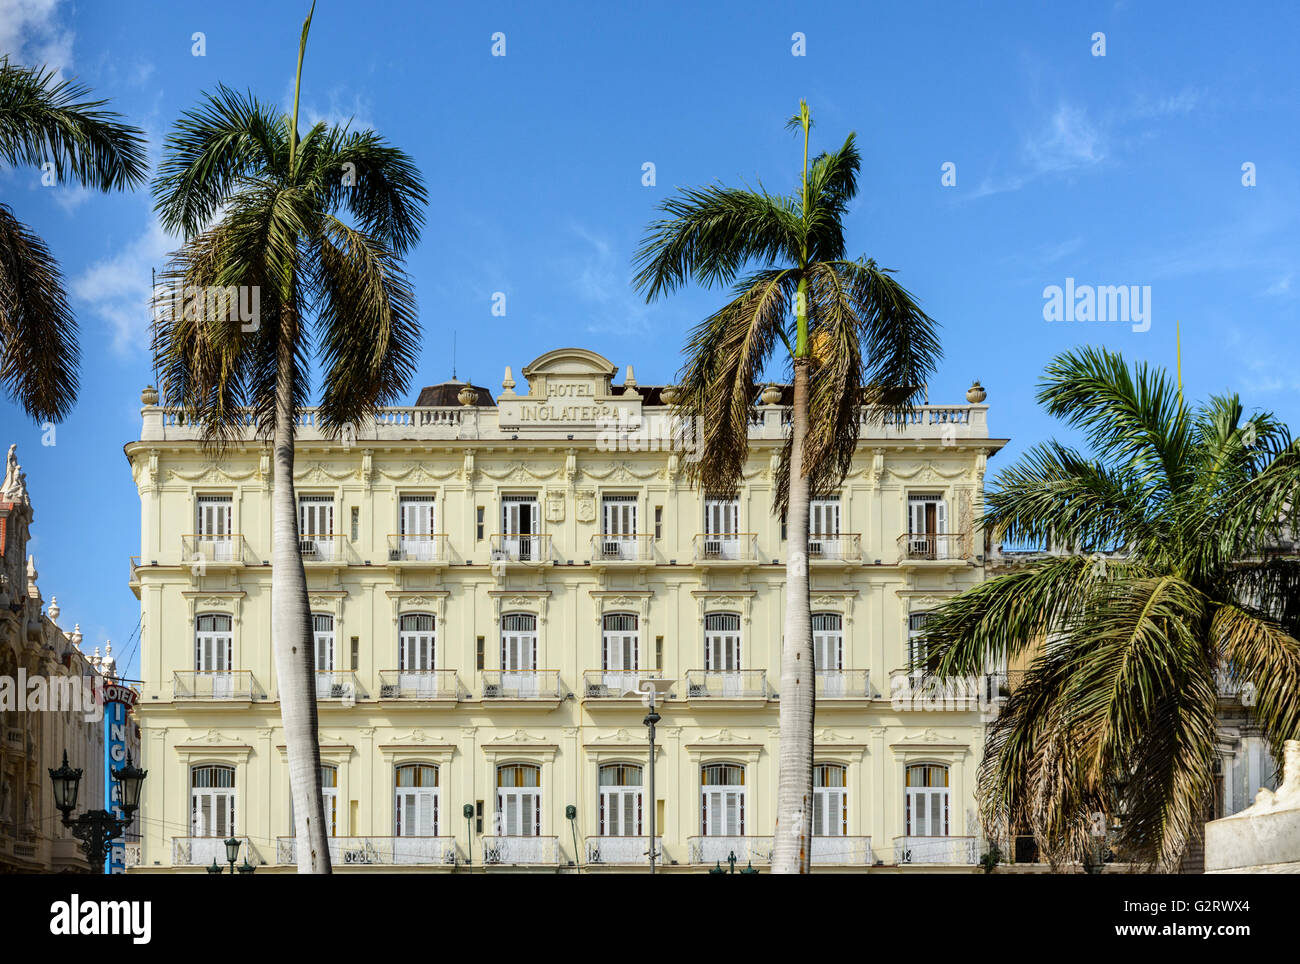 Hotel Inglaterra, Parque Central, Havana, Cuba Stock Photo